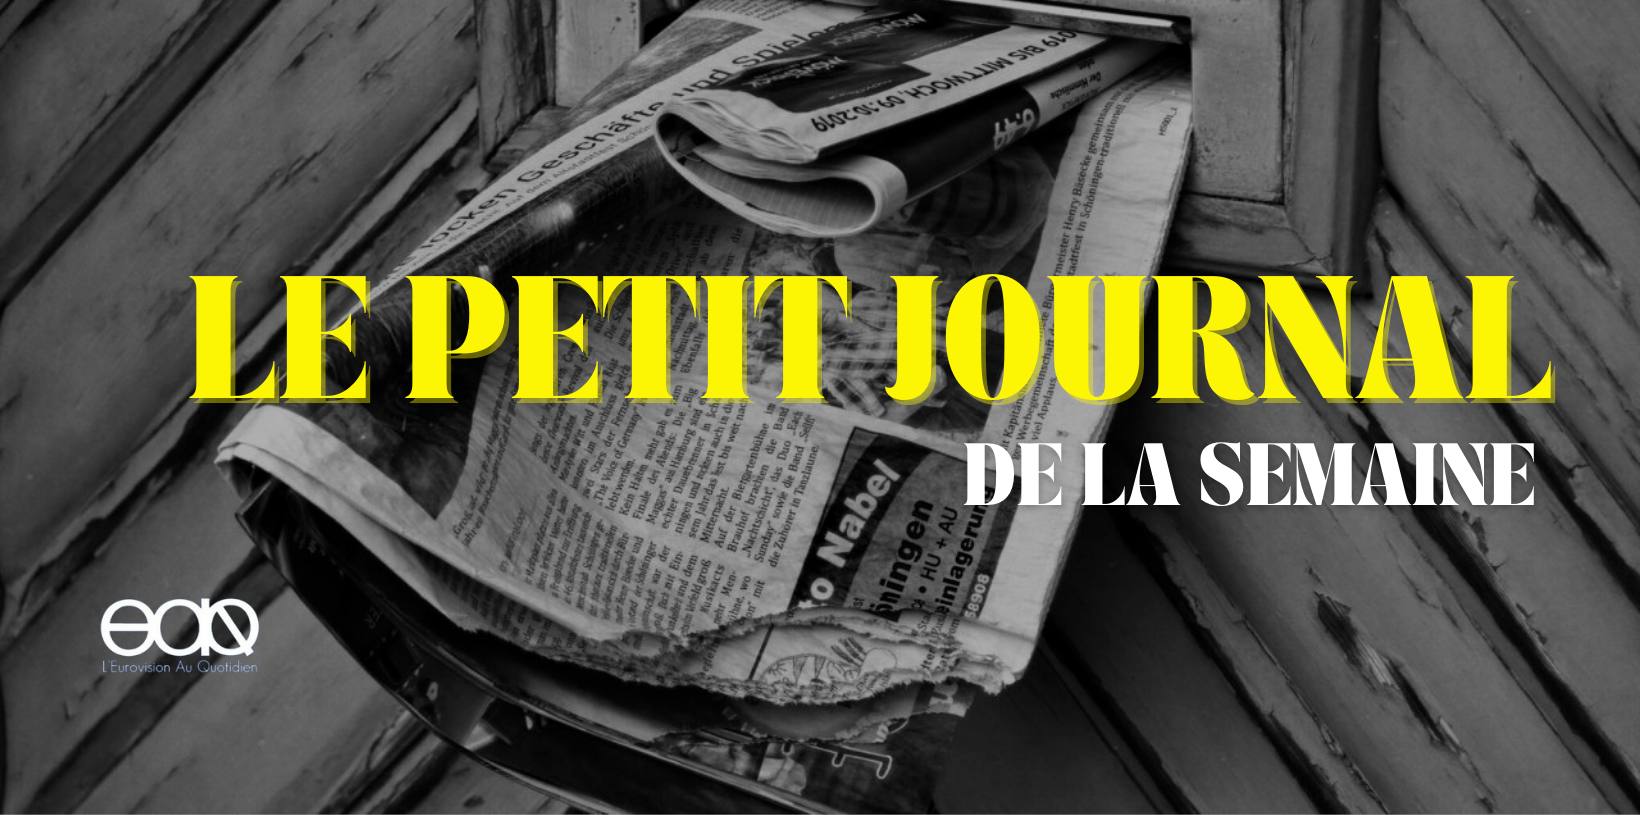 Le Petit Journal de la Semaine: Deutschland kehrt zurück, Frankreich verzaubert…